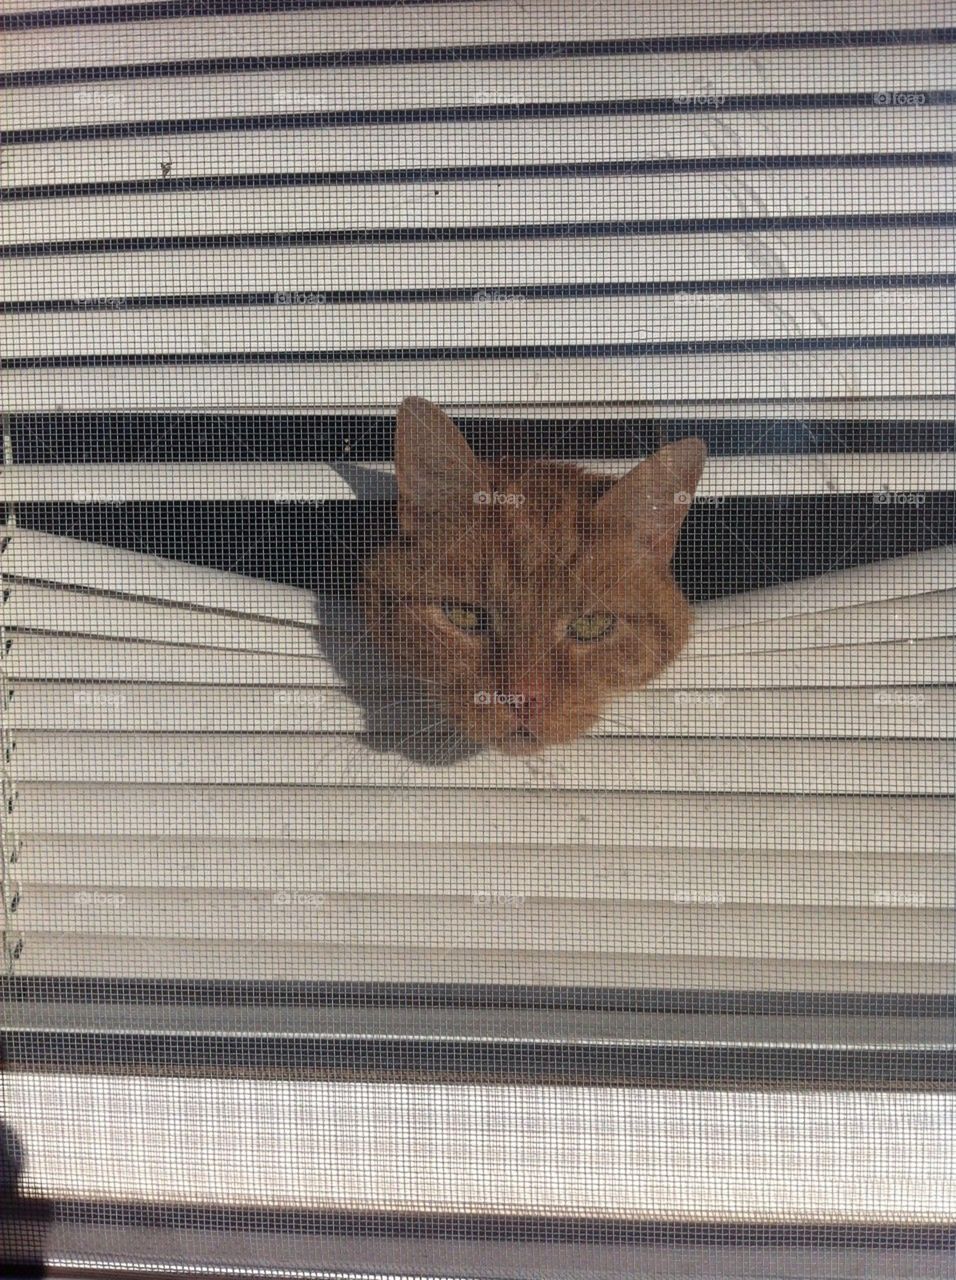 Cat looking thru mini blinds